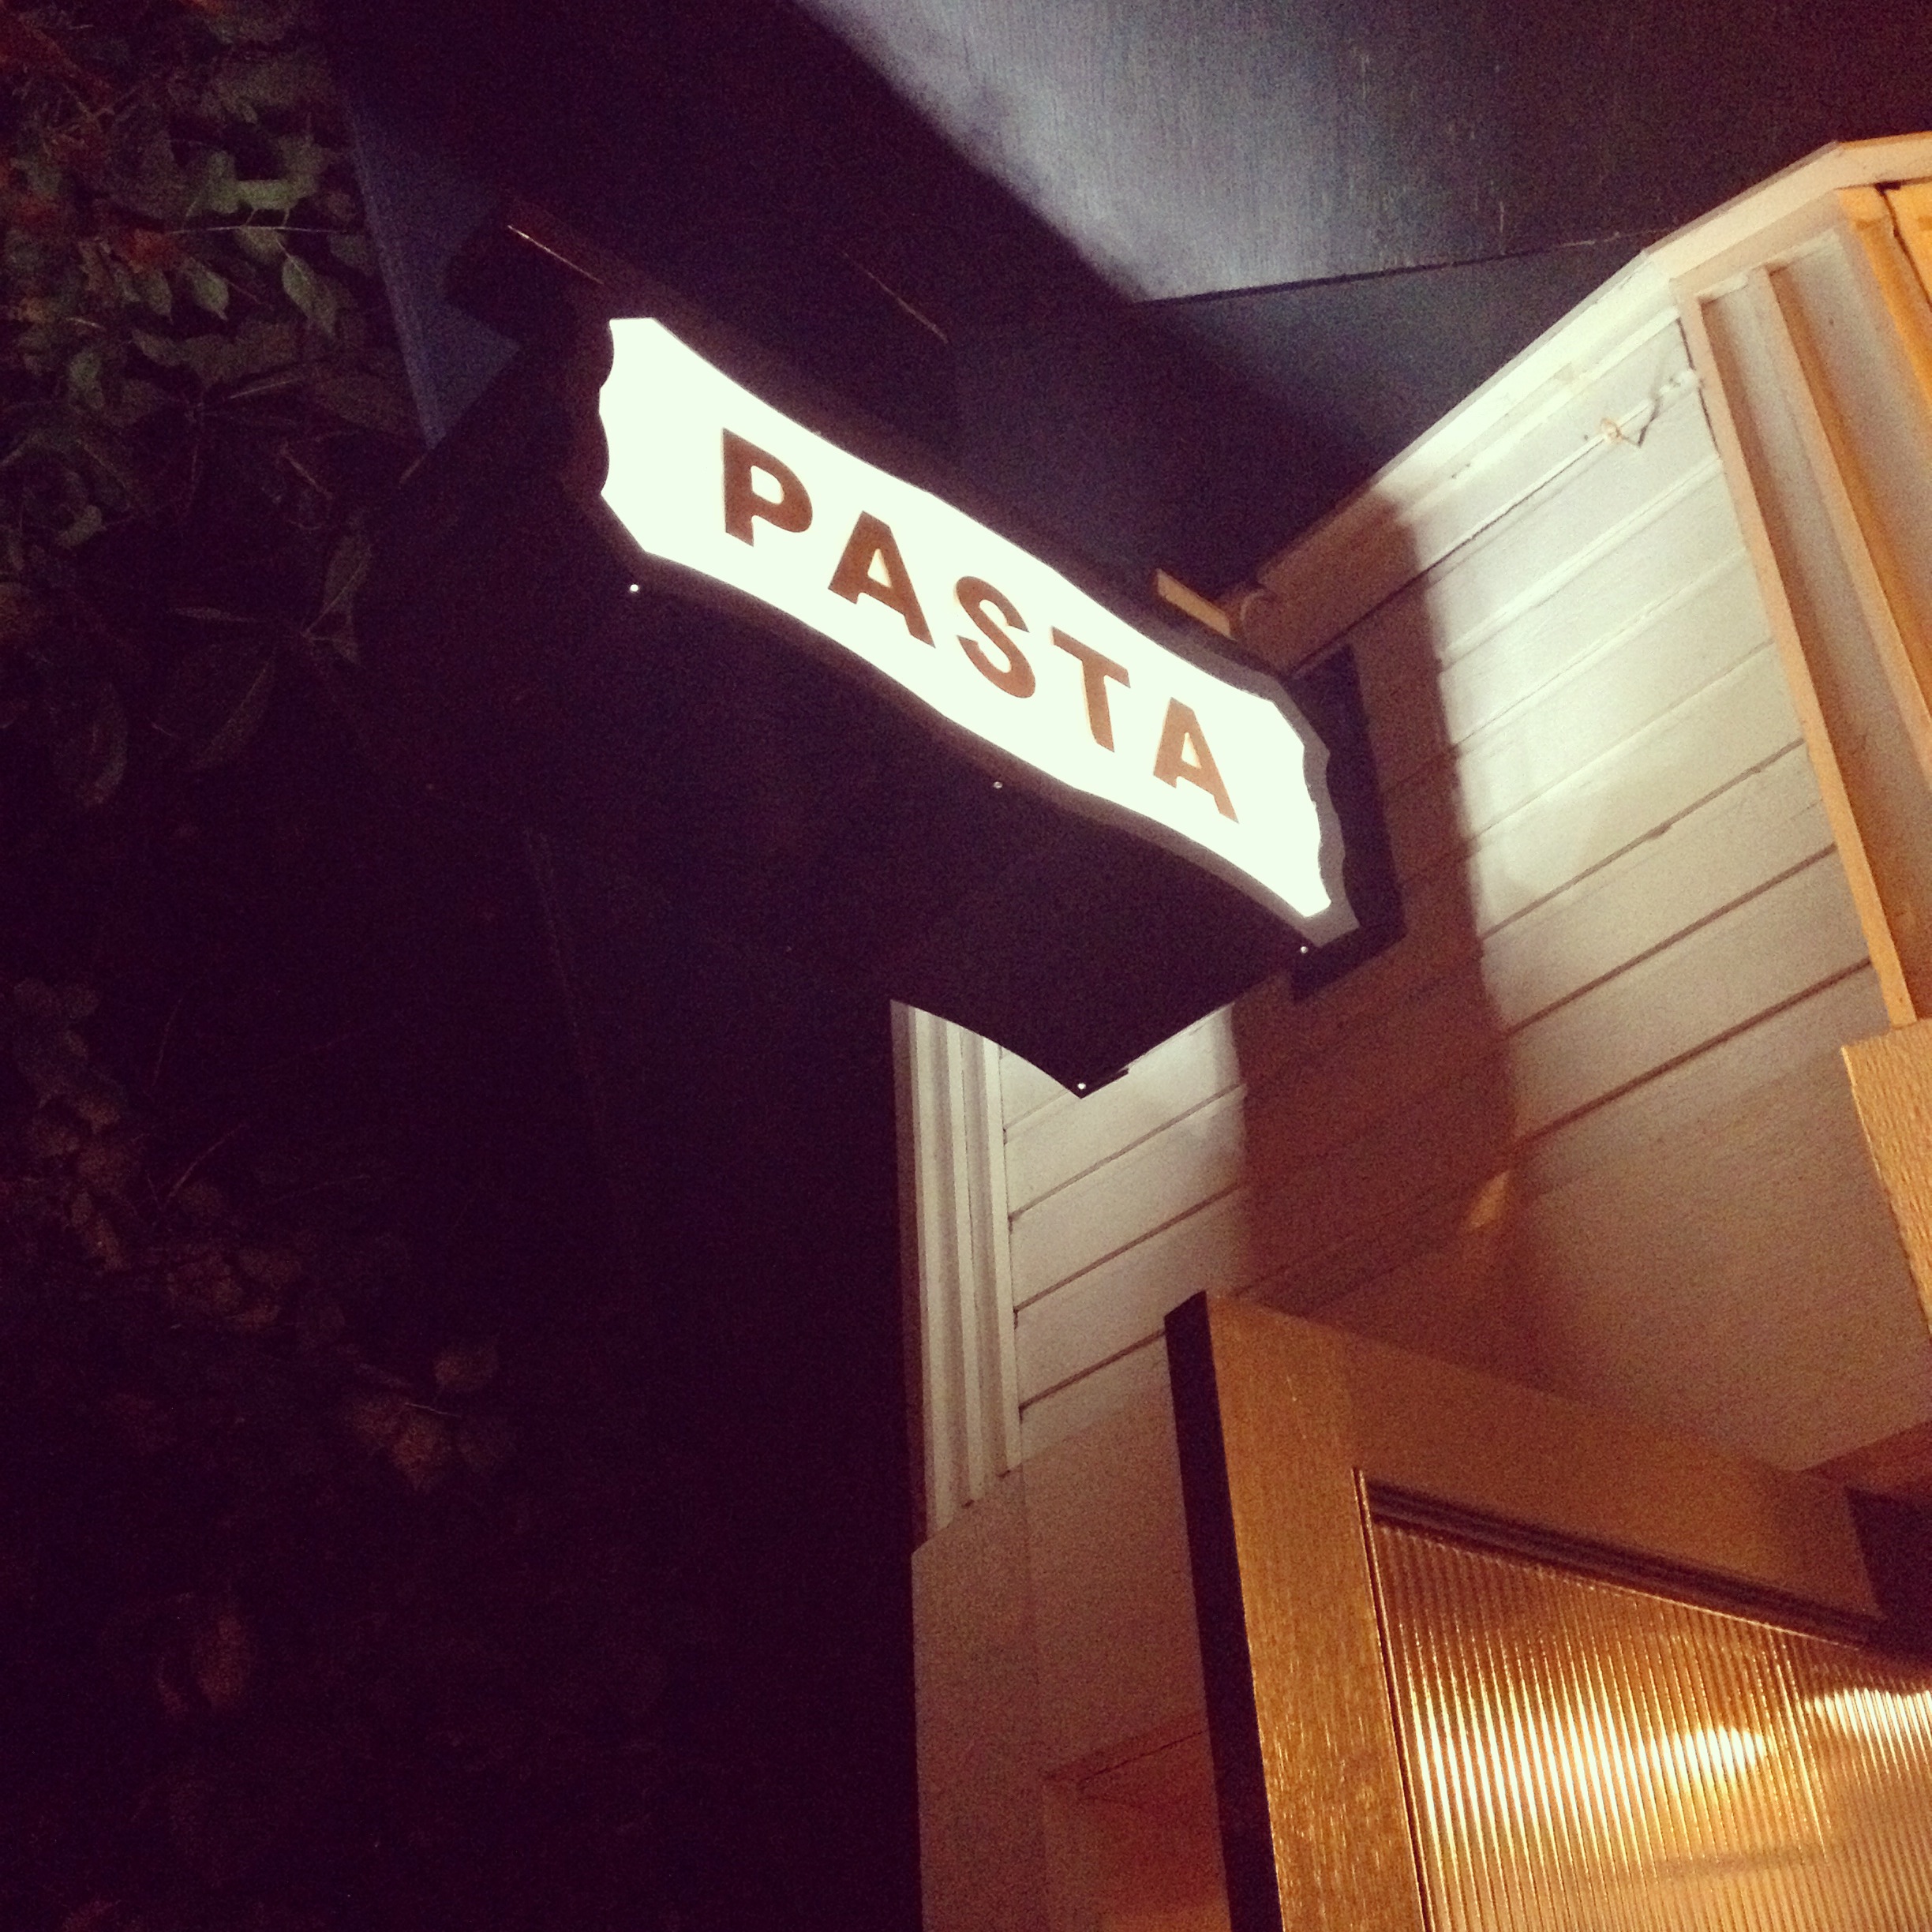 Pasta sign outside of Ask for Luigi